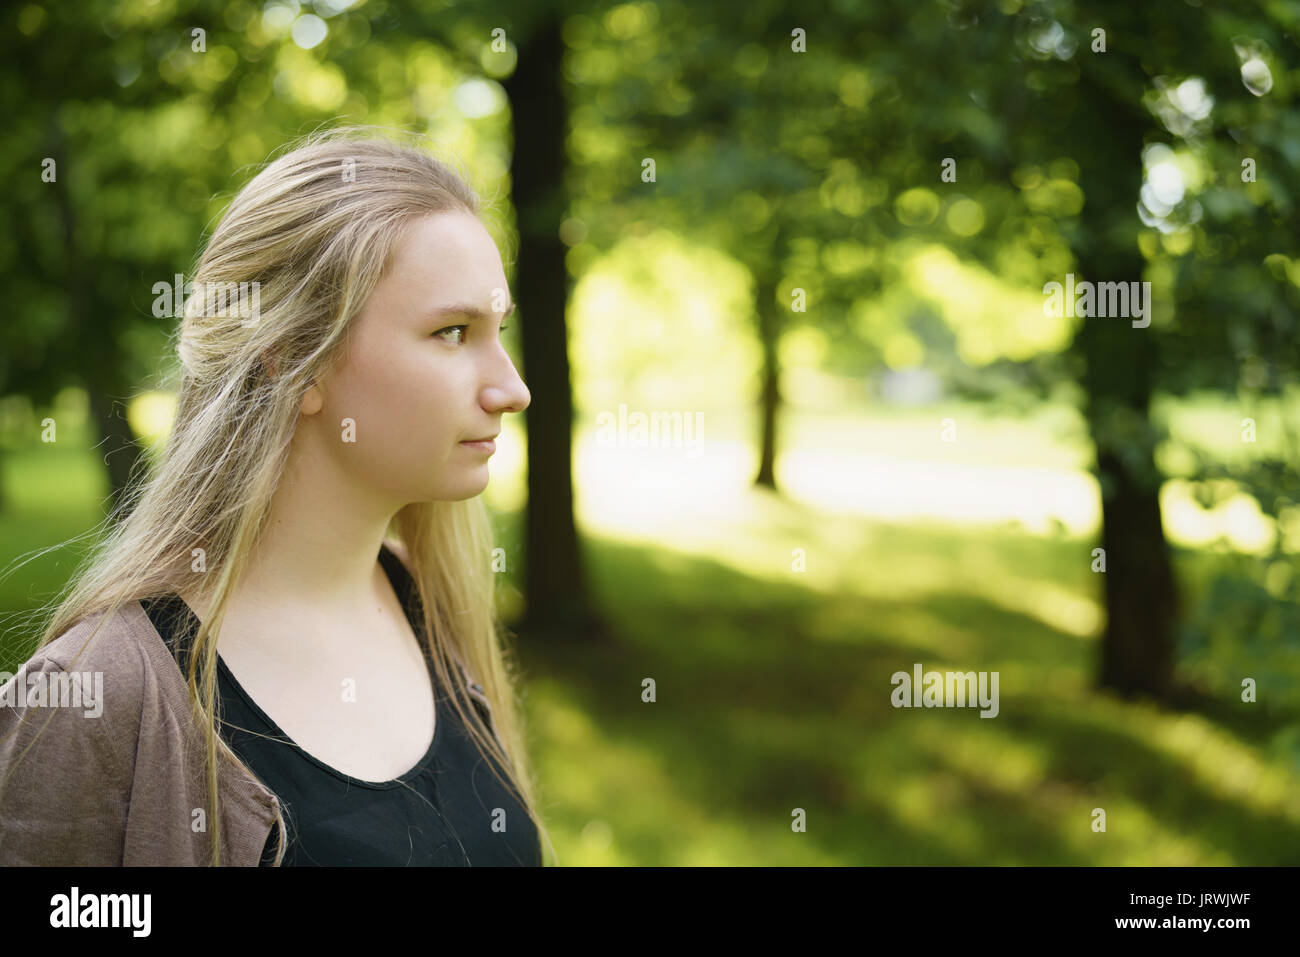 Teen Girl portrait im Green Park in sonnigen Sommertag Stockfoto